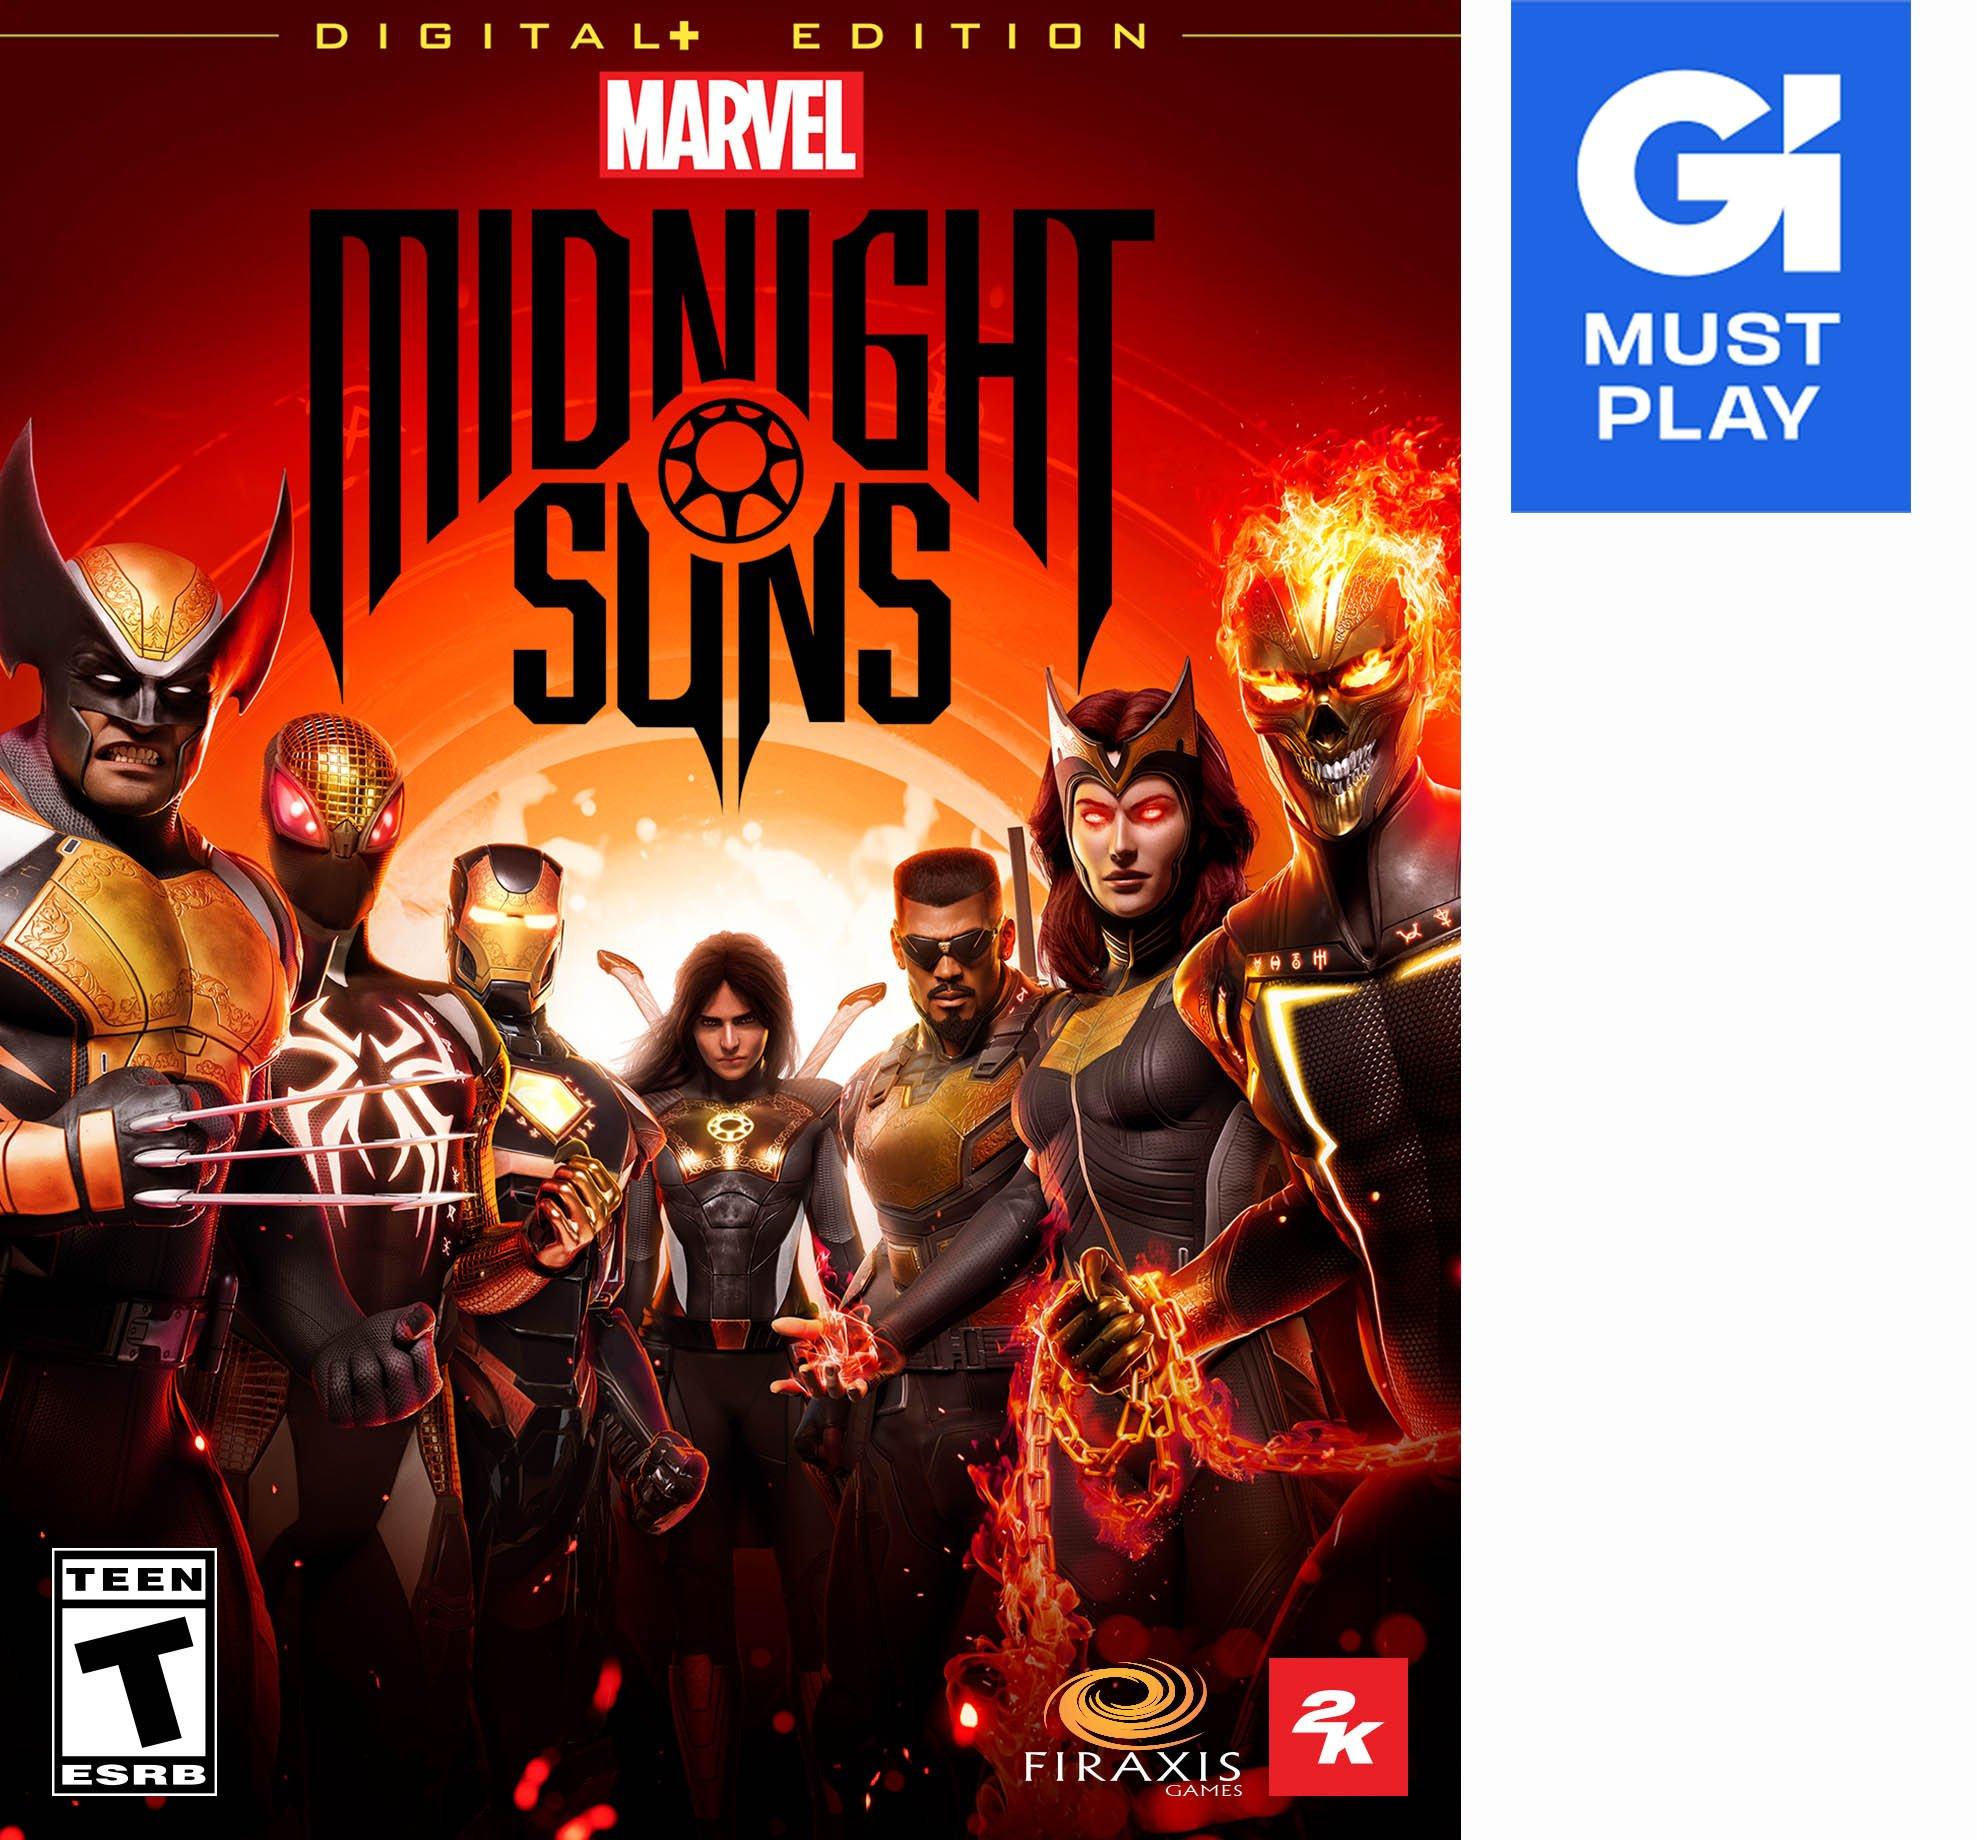 Marvel's Midnight Suns Digital Plus Edition - PC